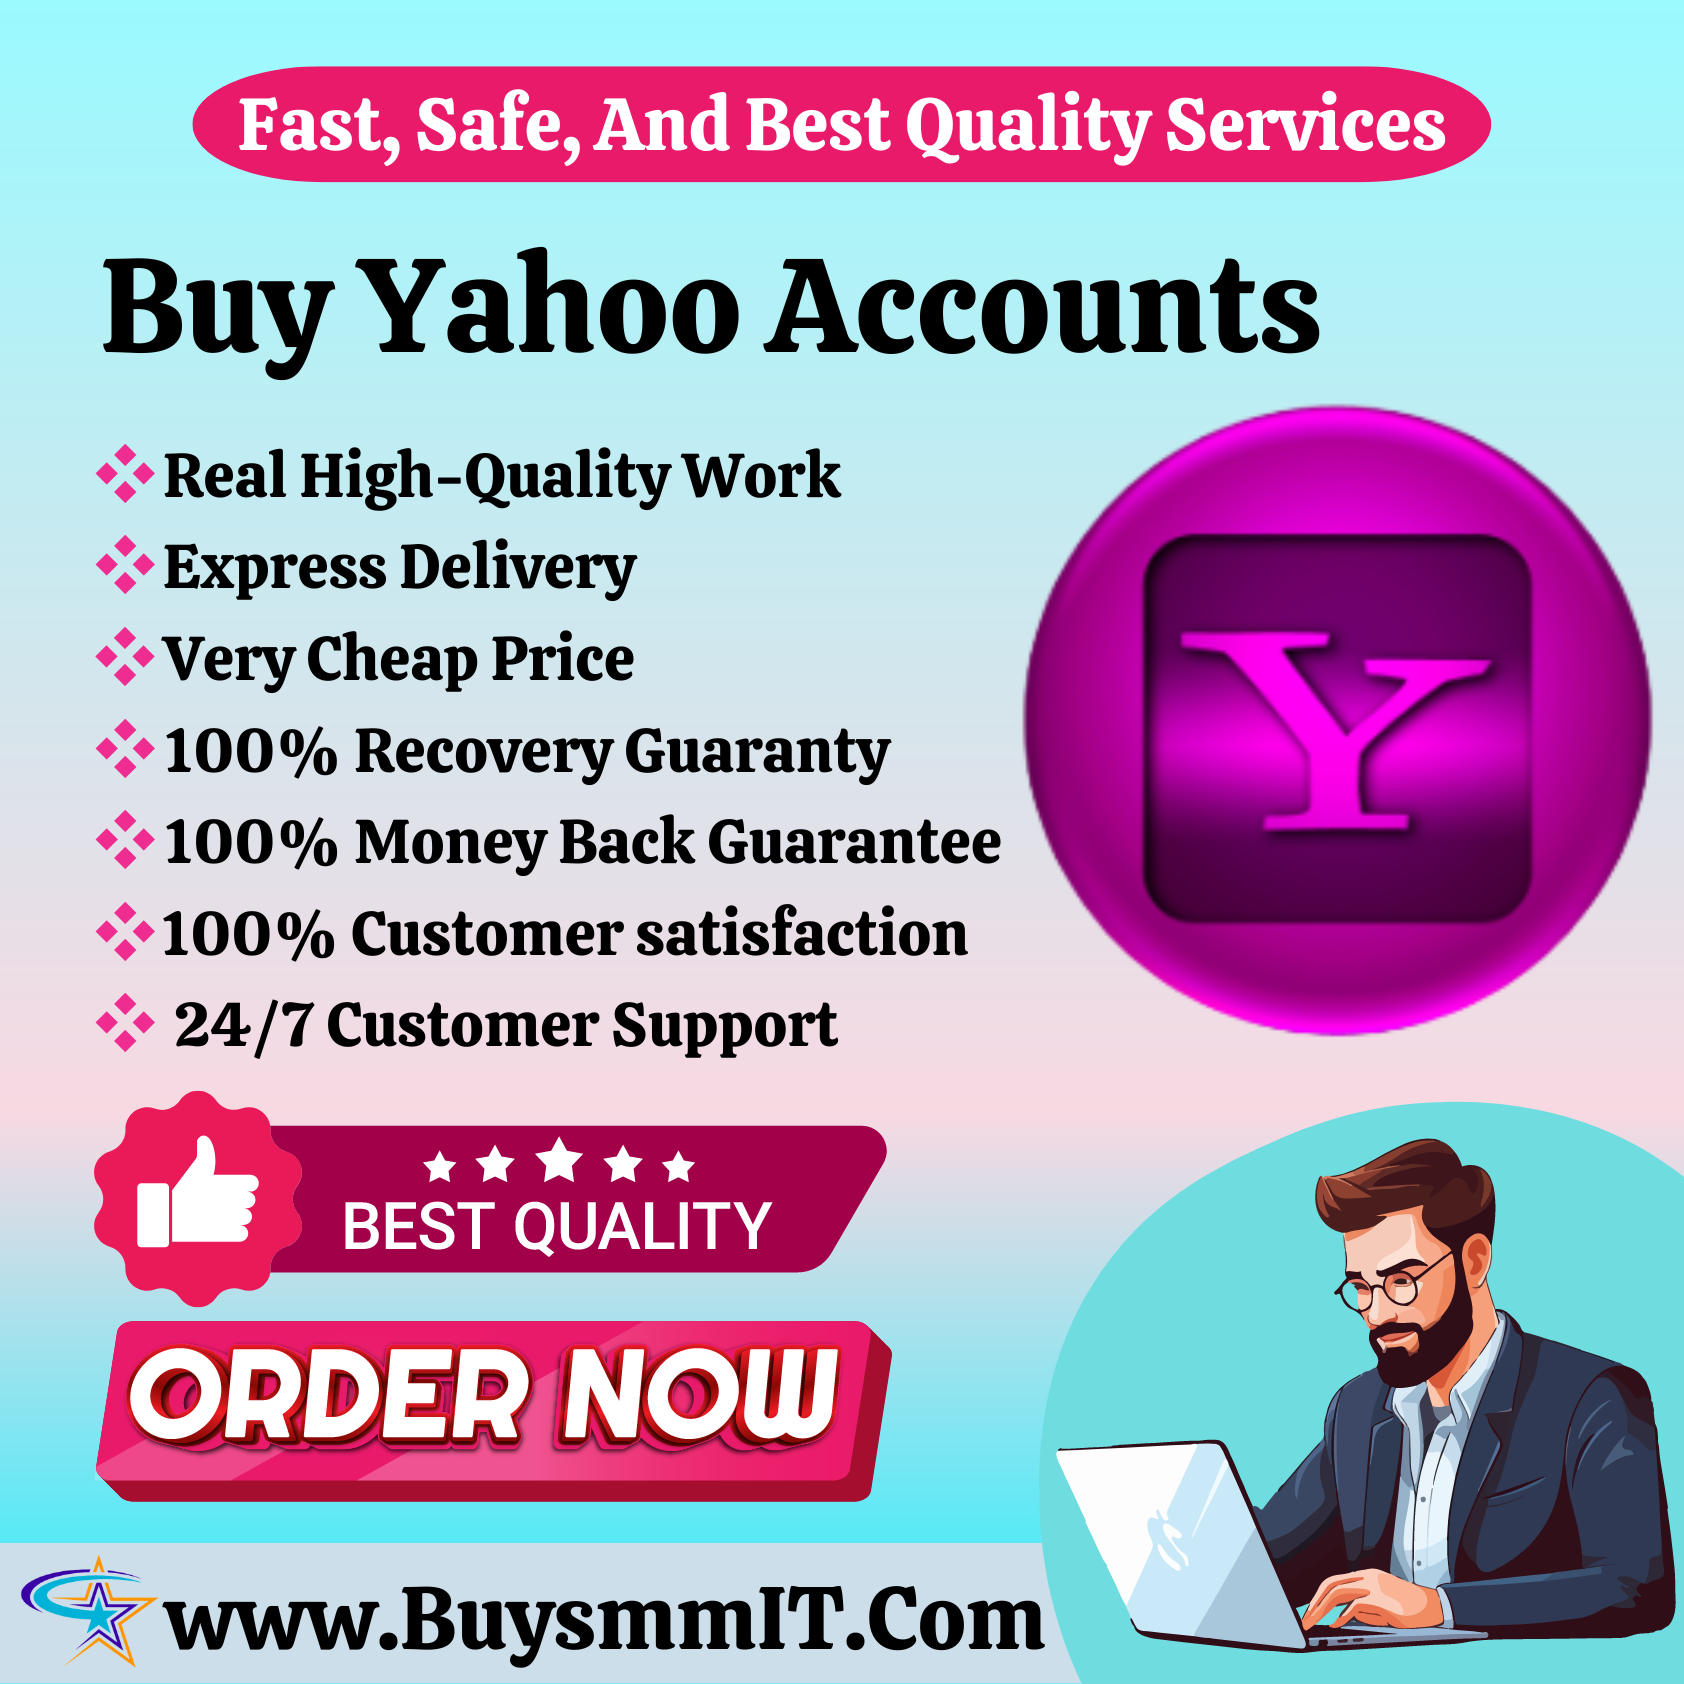 Buy Yahoo Accounts - 100% Aged Accounts For Sale